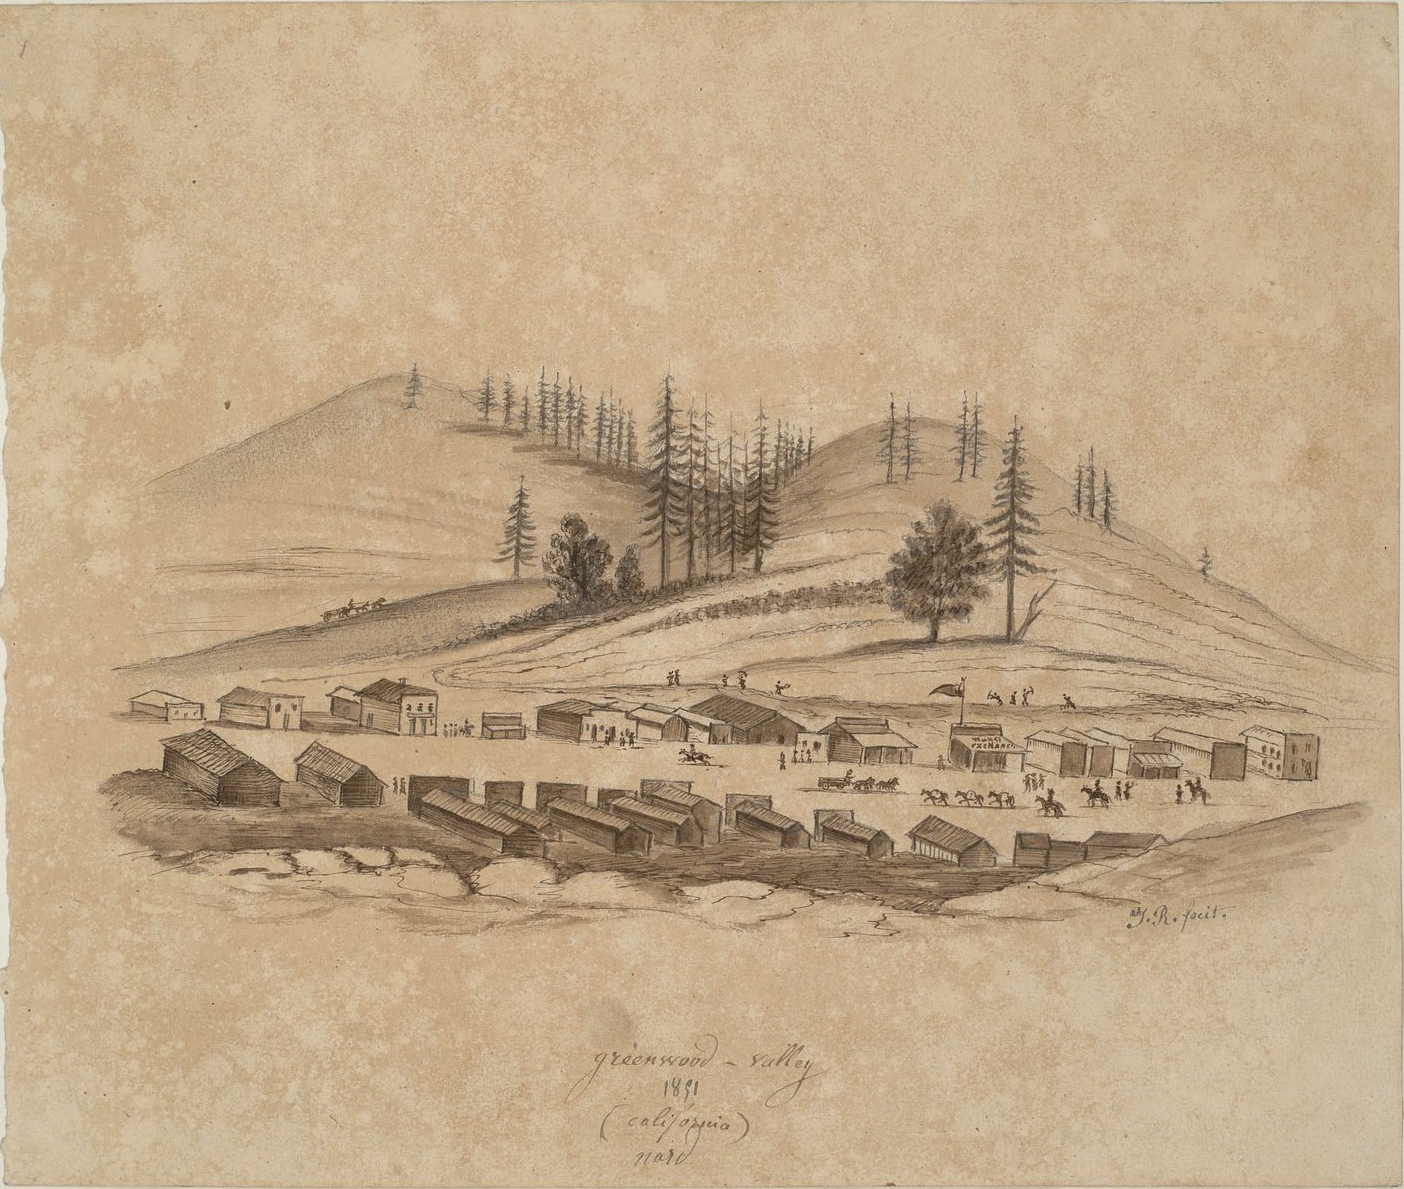 [View+of+Greenwood+Valley,+California+1851.jpg]